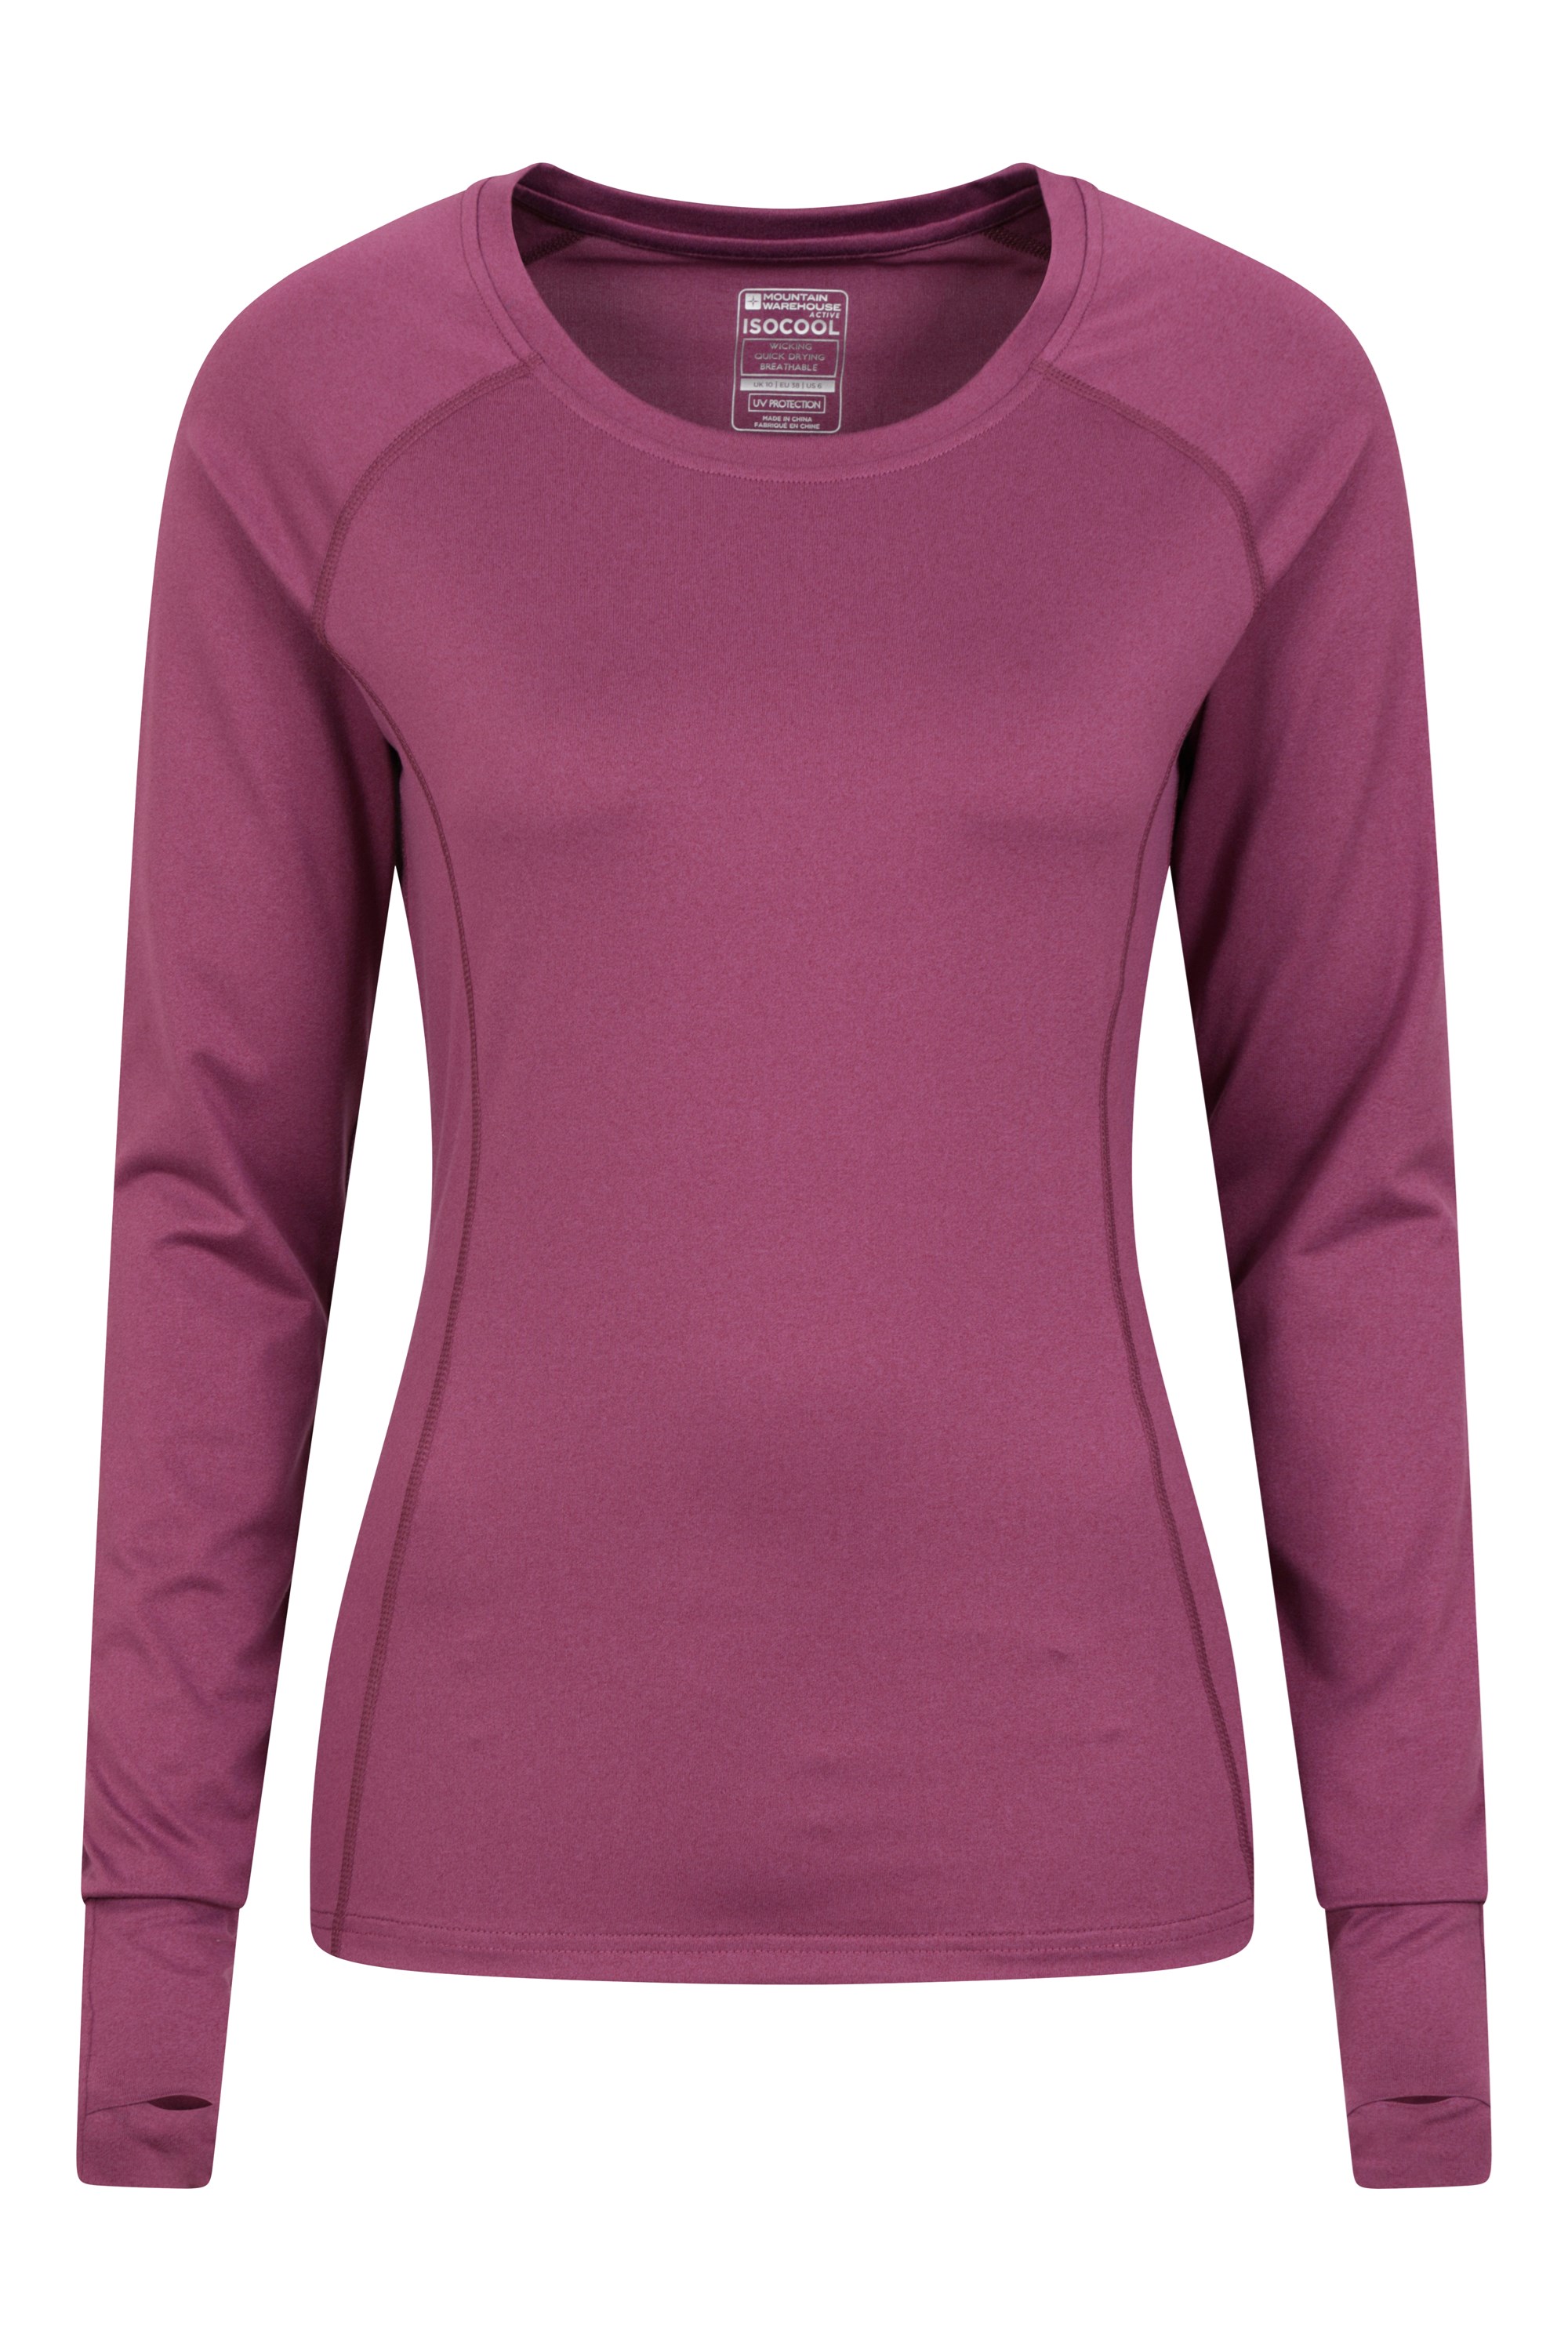 Mountain Warehouse Mountain Warehouse Women's Sweatshirt Zip Neck Size 10 Crimson Long Sleeve 